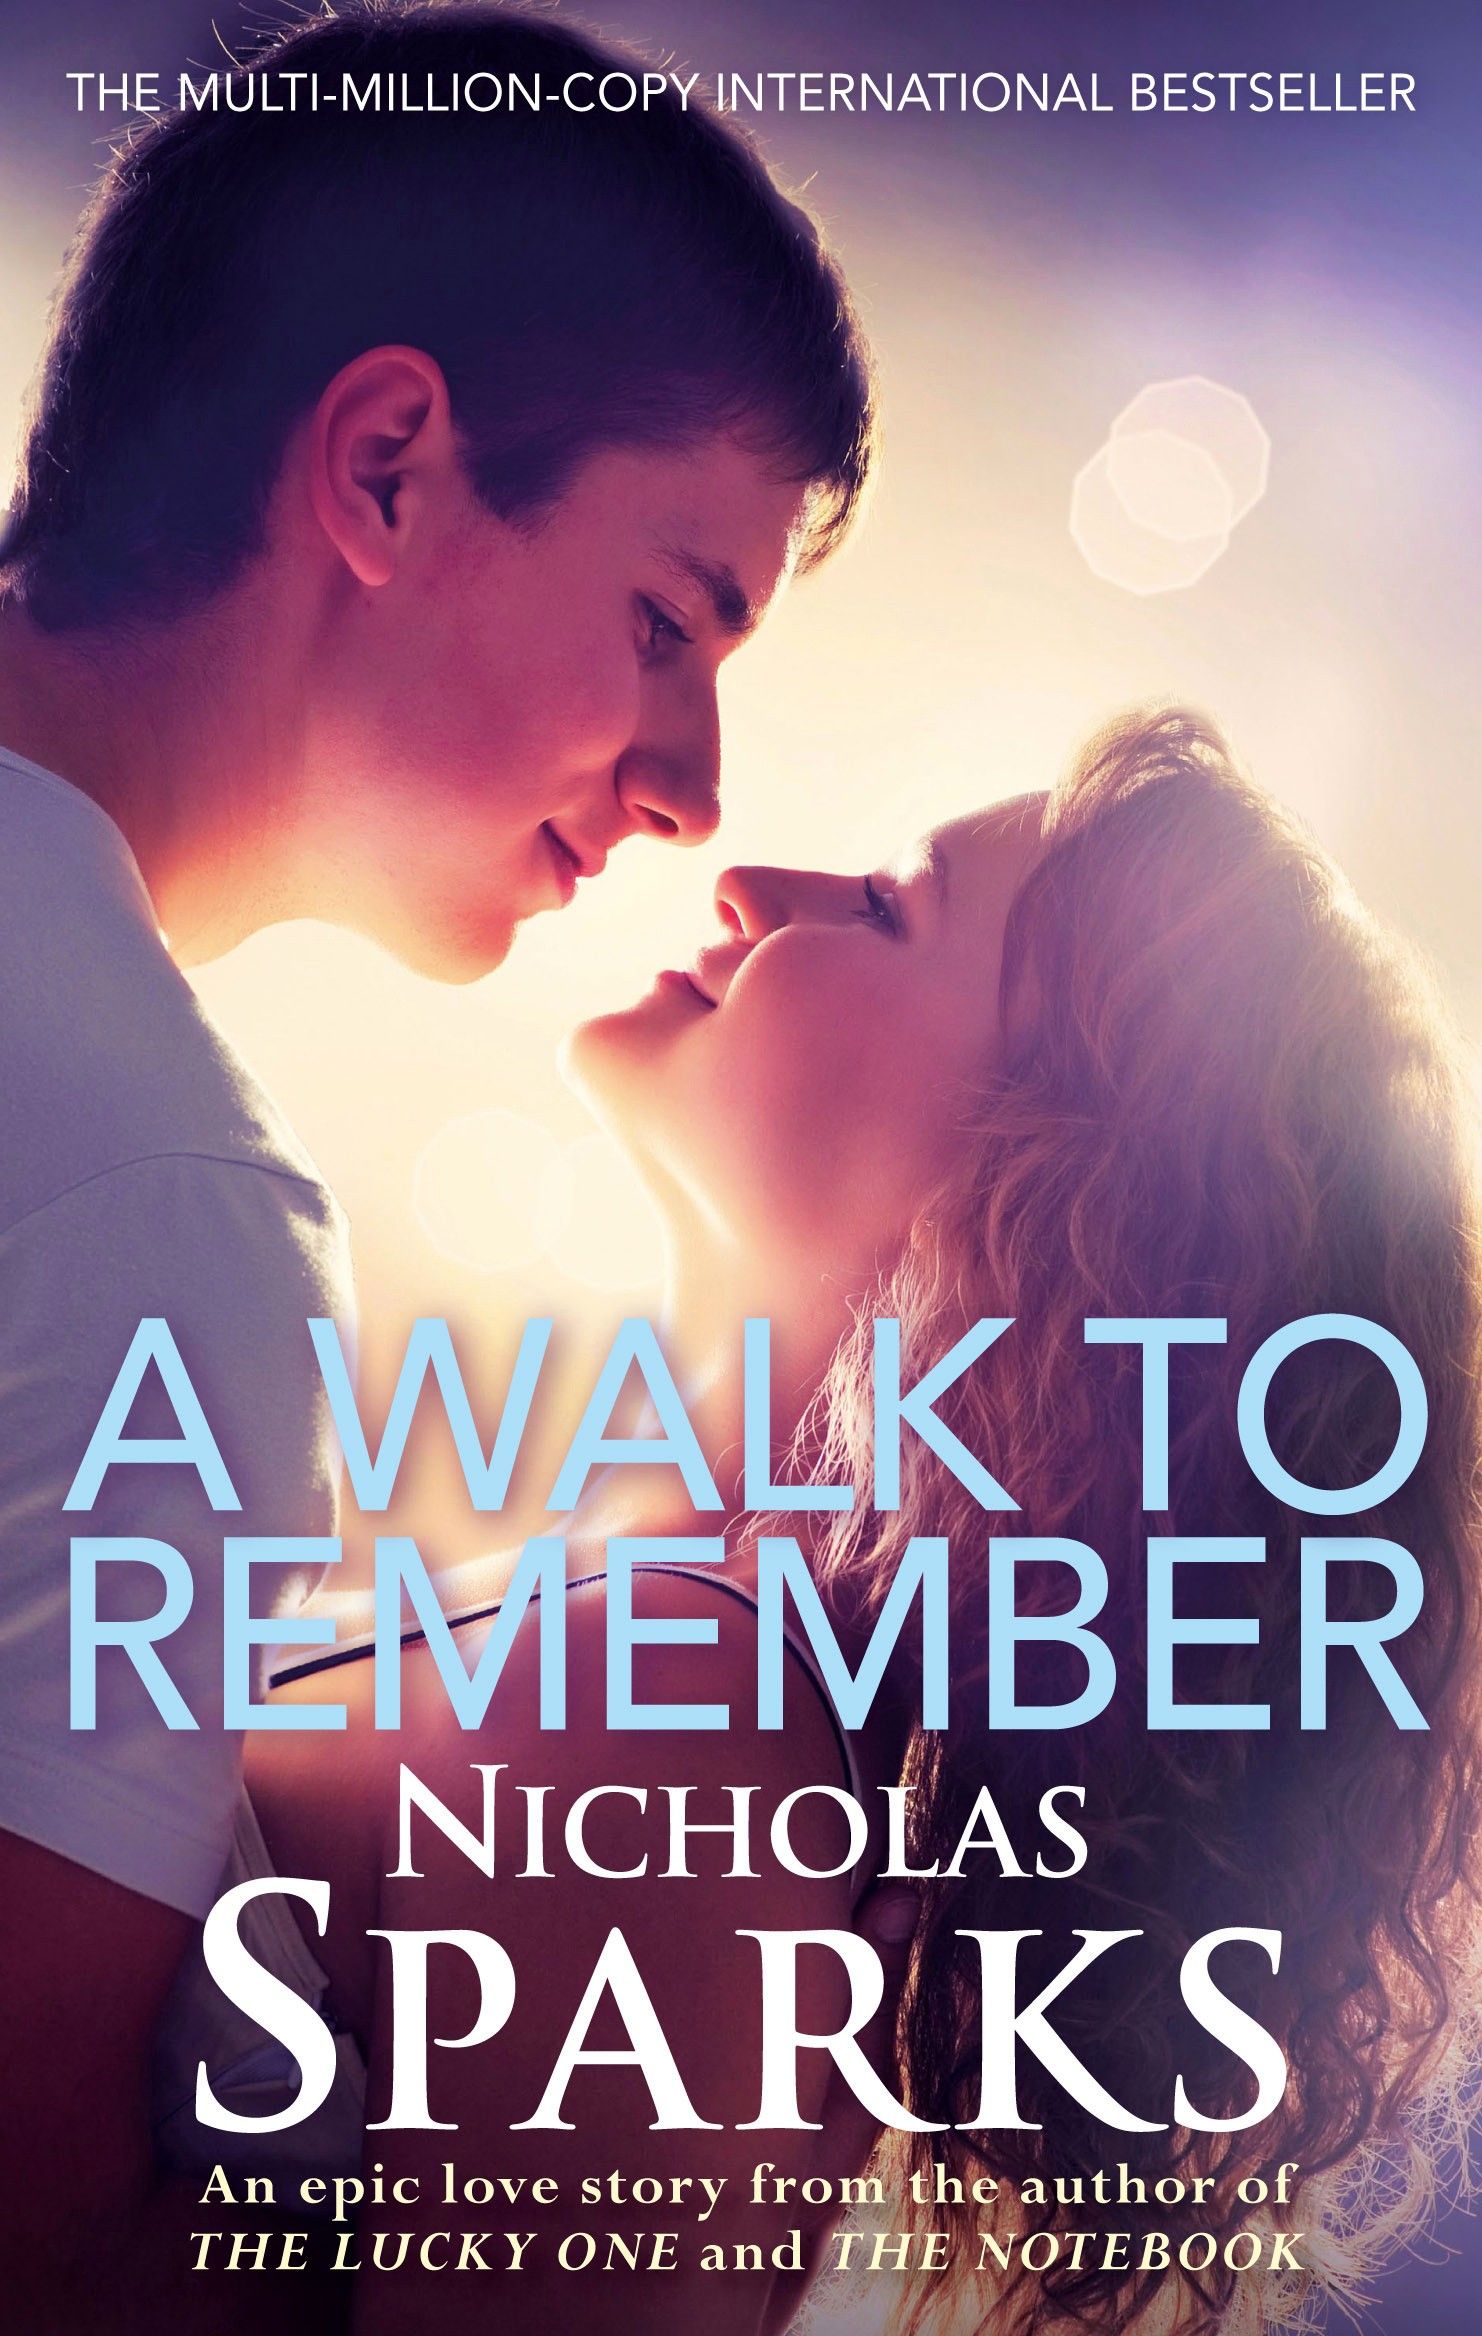 A year to remember. Николас Спаркс a walk to remember. Спеши любить Николас Спаркс книга. Николас Спаркс спеши любить на английском. Книга спеши любить Николас.